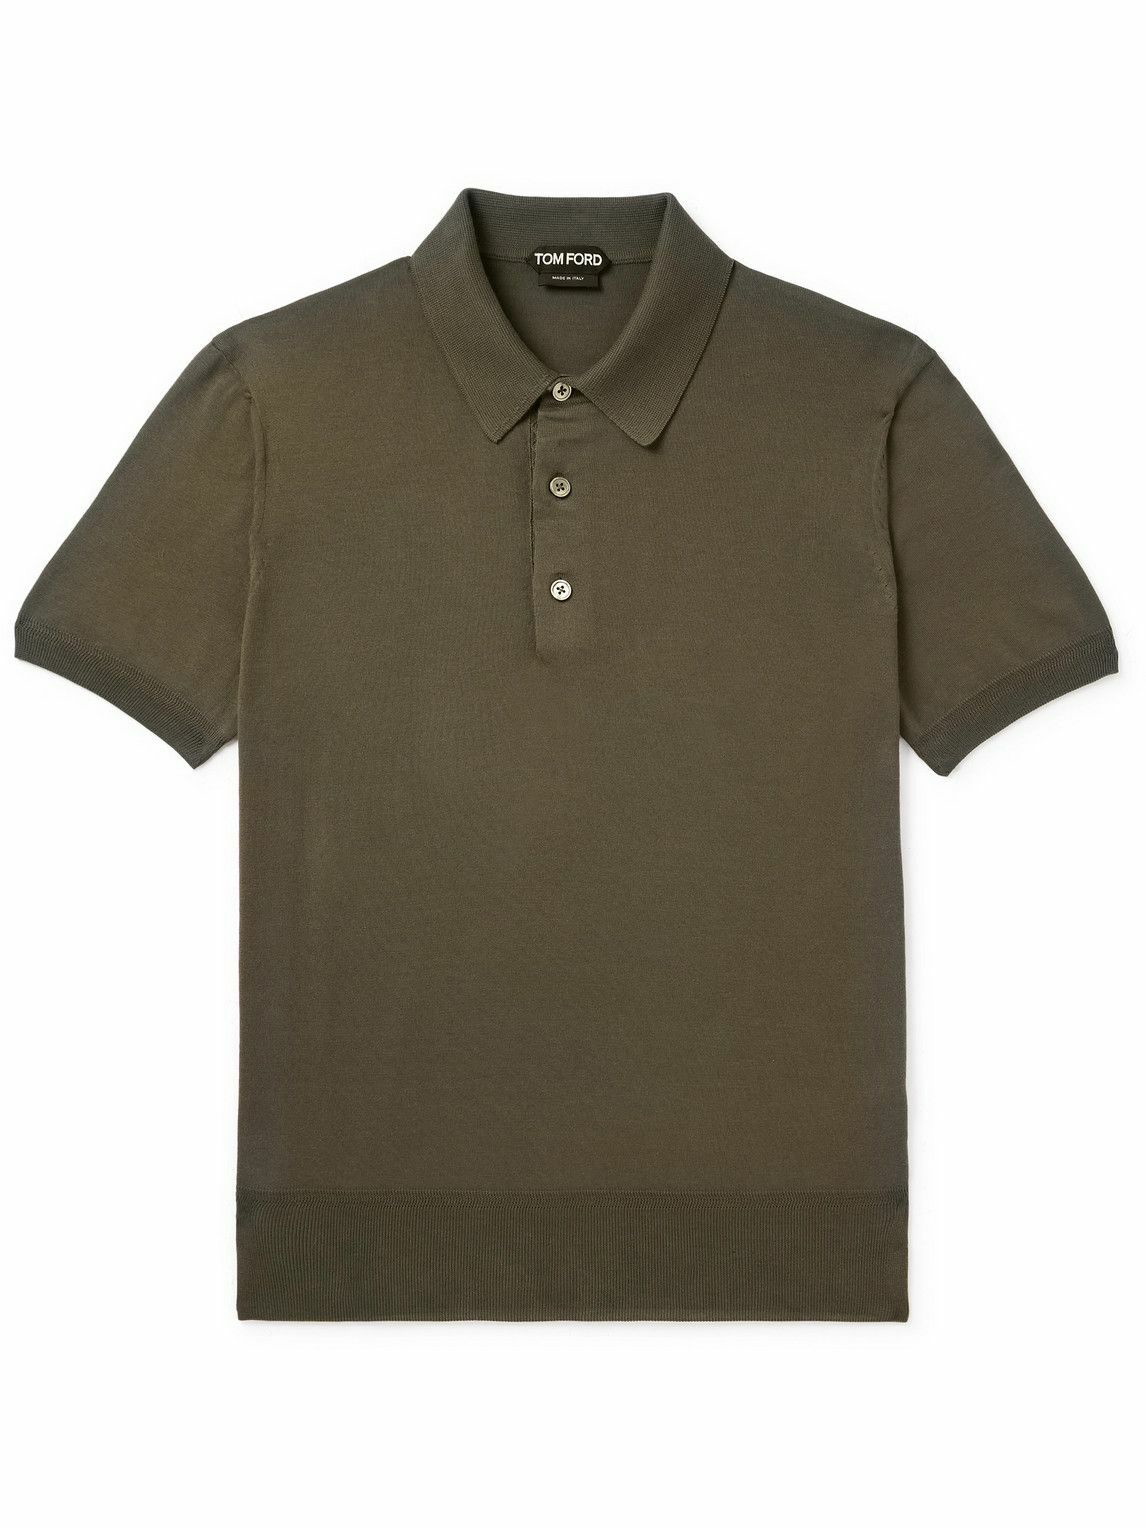 TOM FORD - Slim-Fit Cotton Polo Shirt - Green TOM FORD